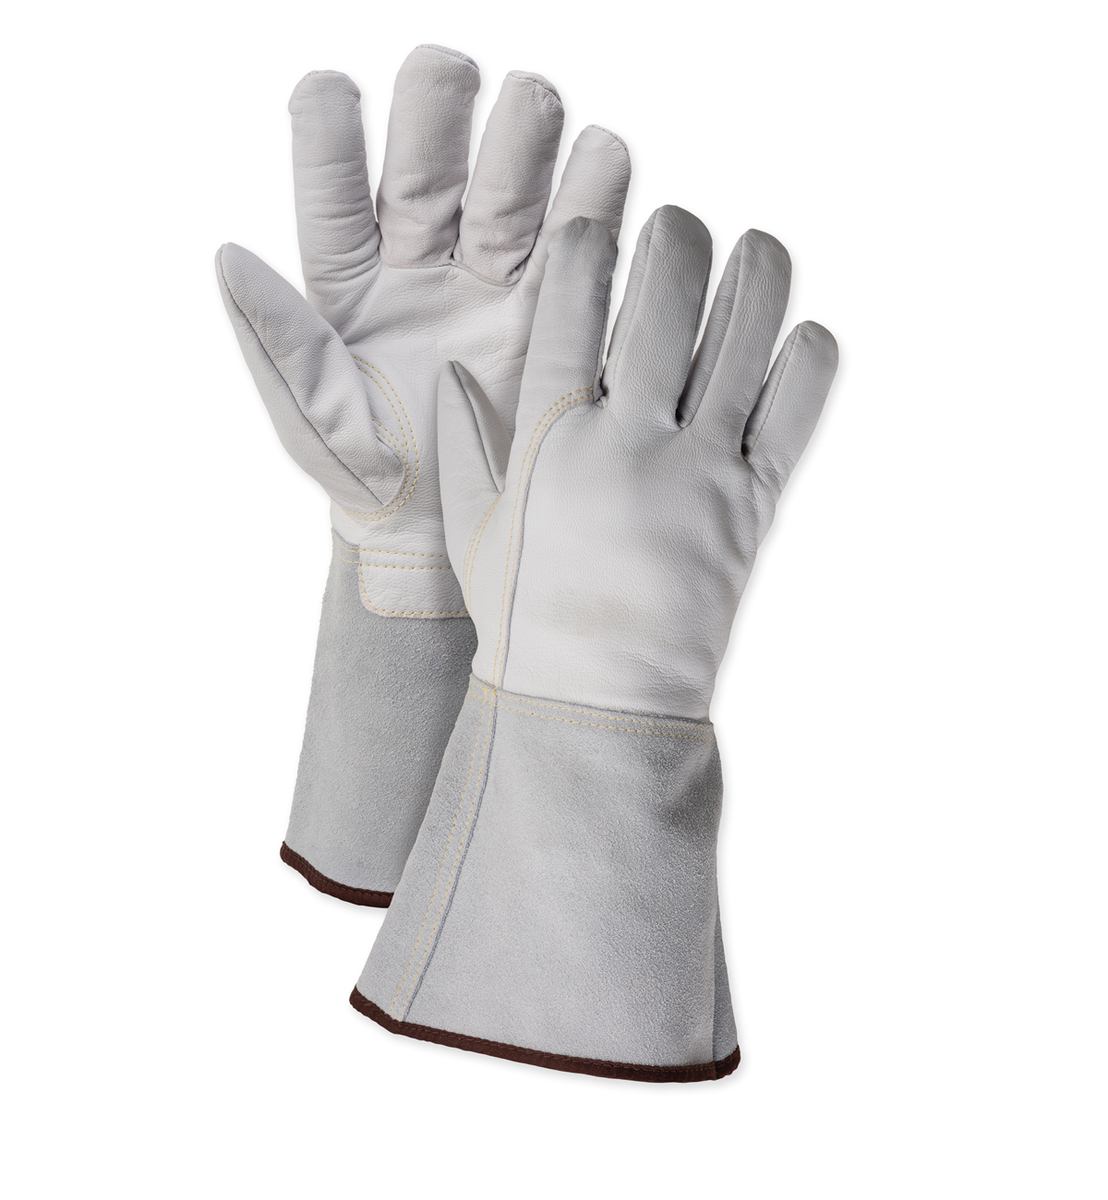 Wells Lamont X-Large Goatskin Cut Resistant Gloves